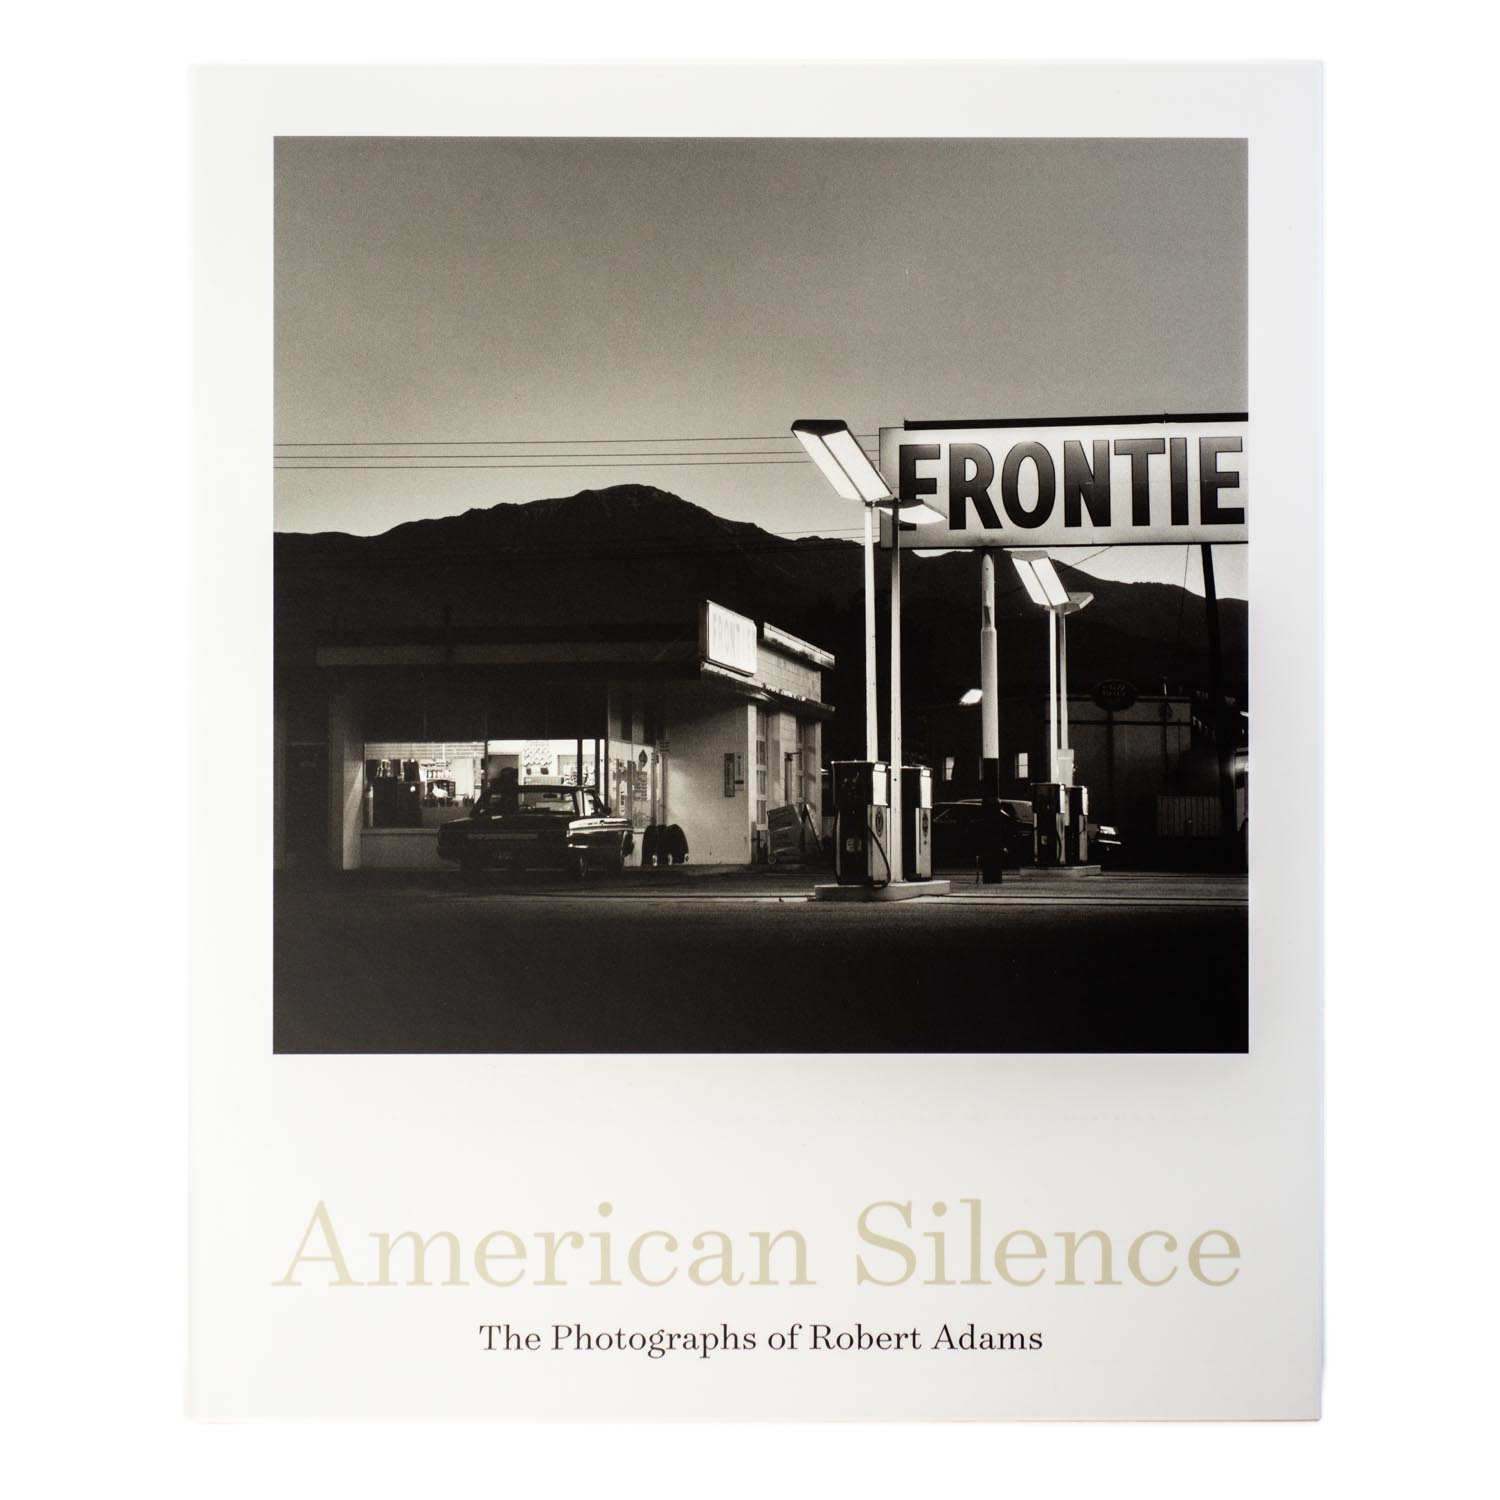 TThumbnail image for Robert Adams - American Silence